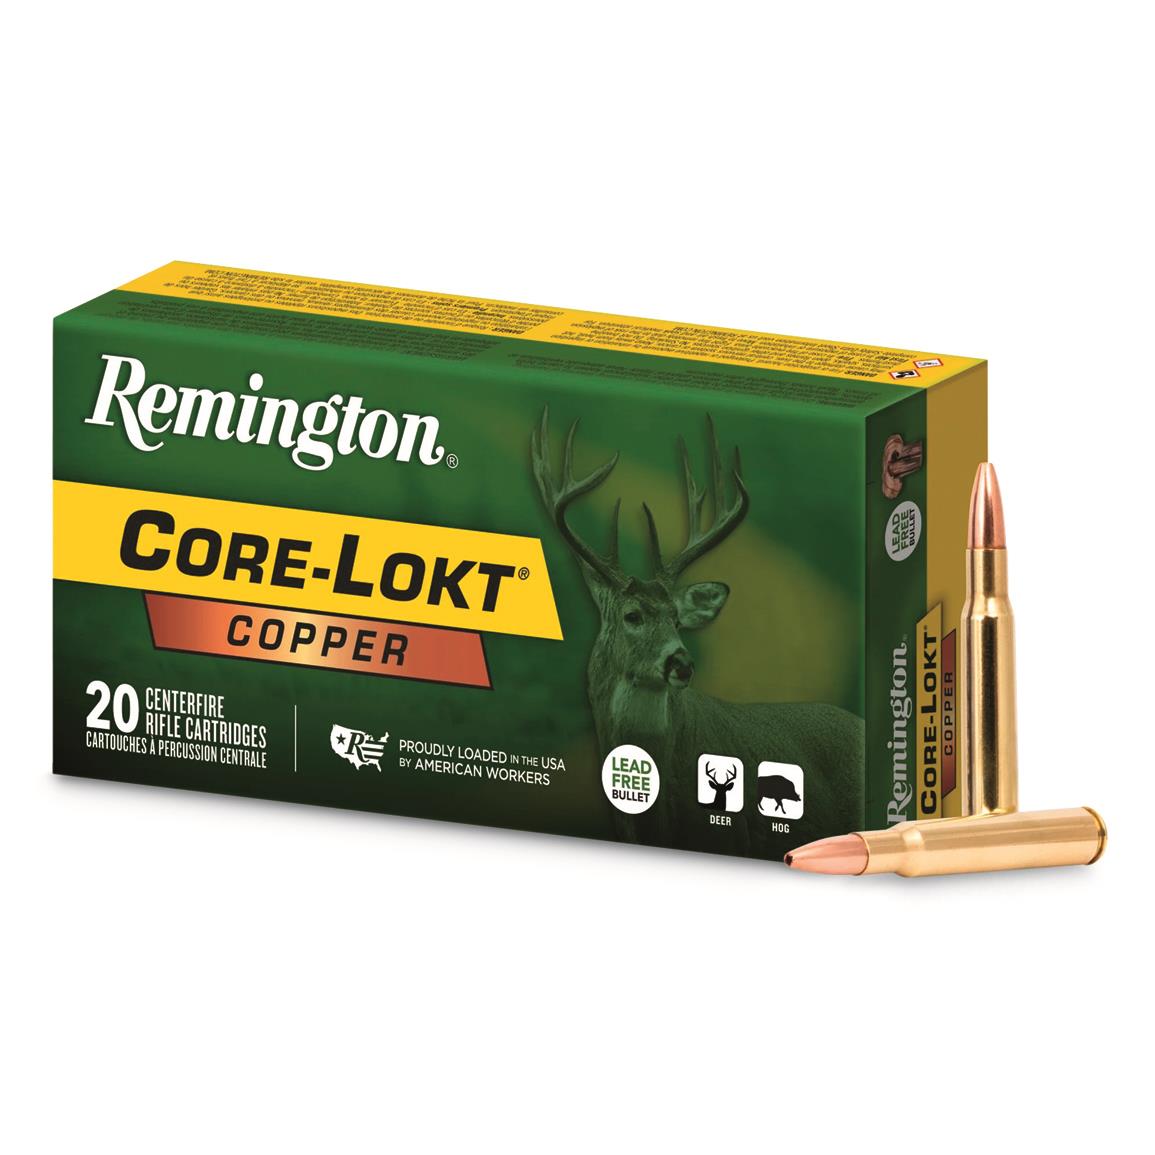 Remington Core-Lokt Copper, .30-06 Springfield, Copper HP, 150 Grain, 20 Rounds